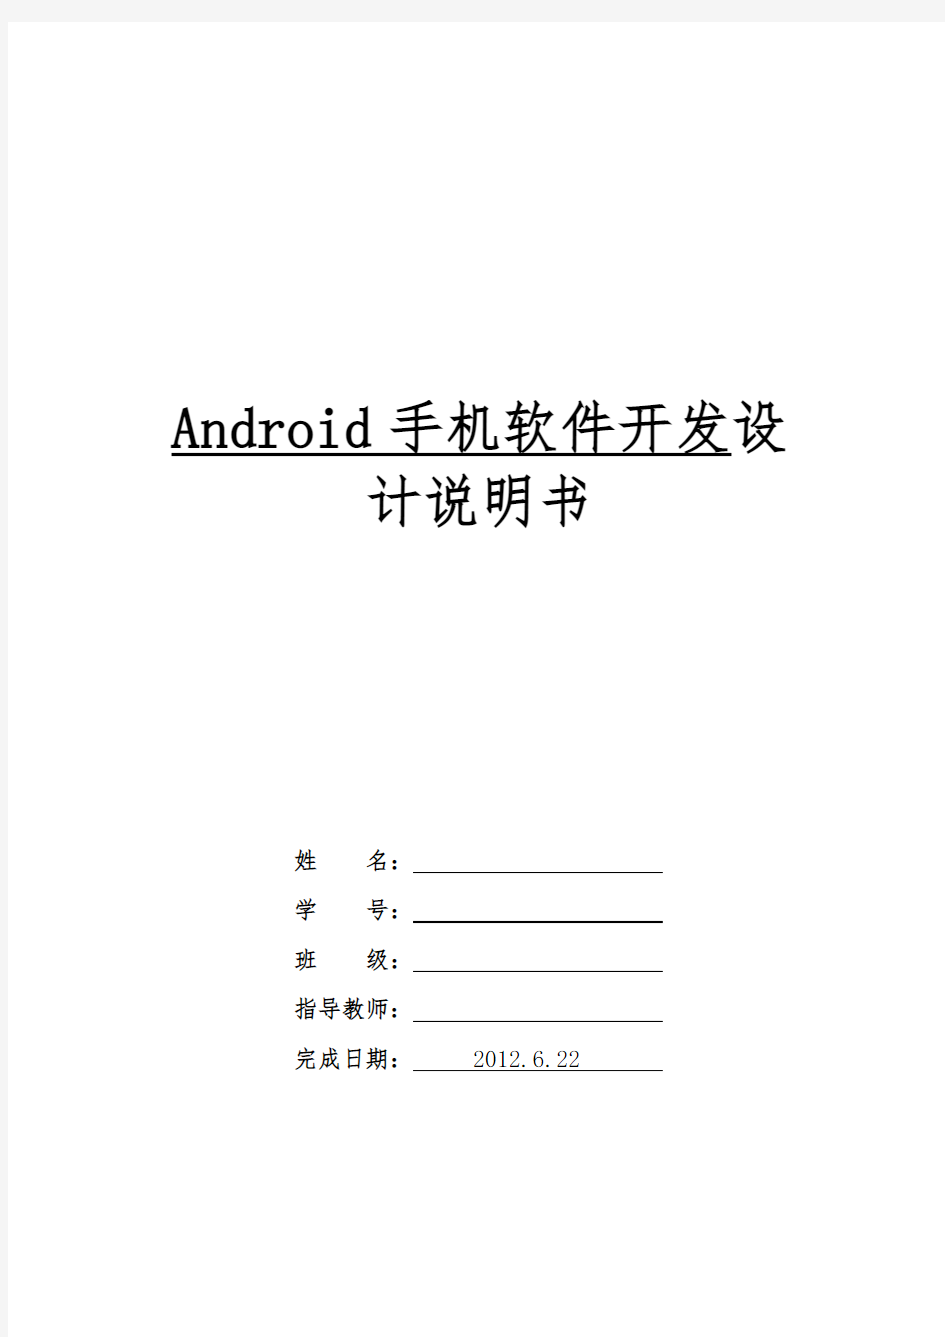 Android手机软件开发设计说明书